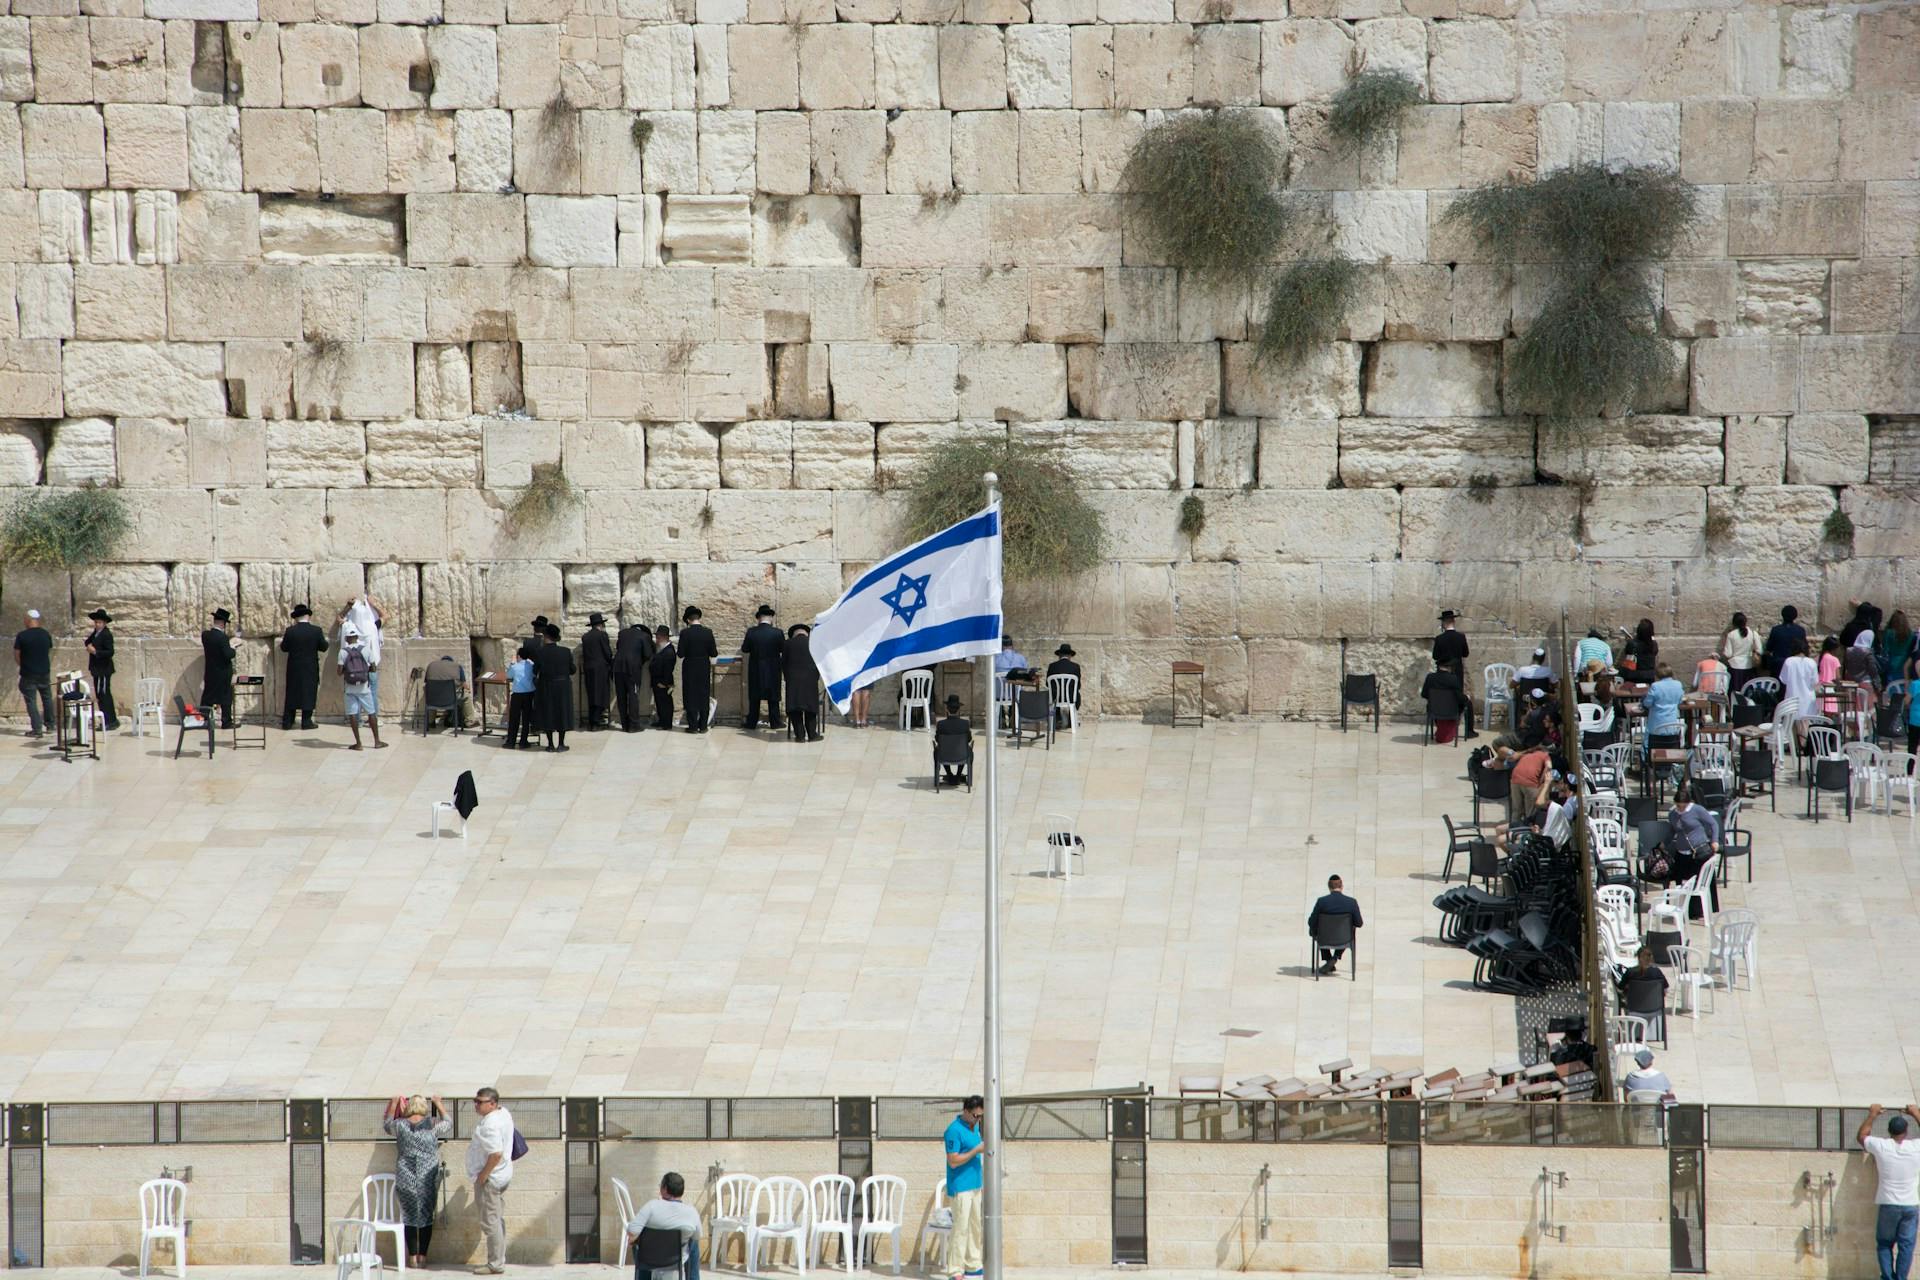 Western Wall in Jerusalem with Israeli flag